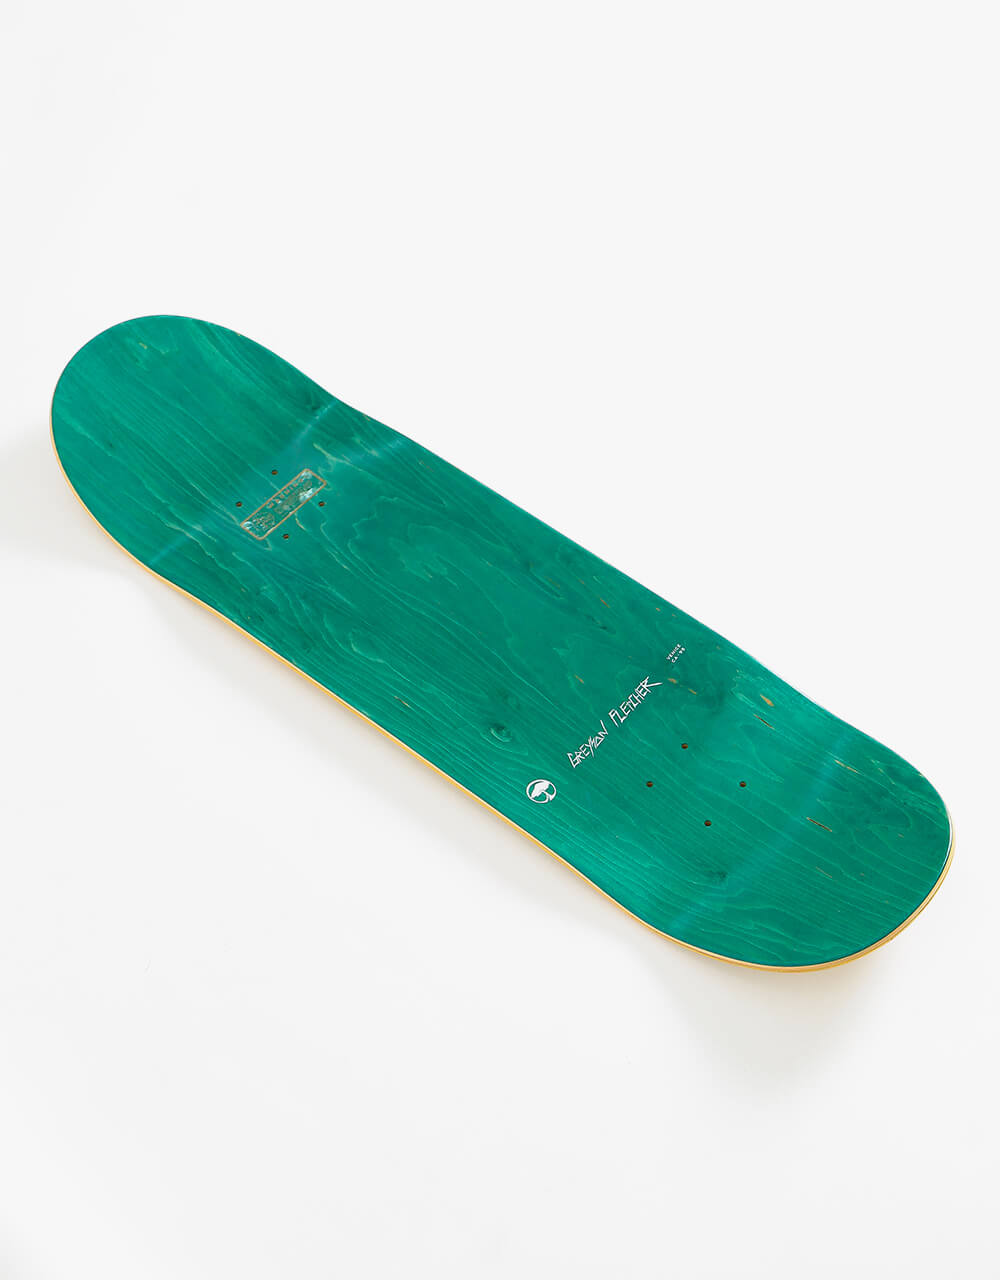 Arbor Greyson Darksider Skateboard Deck - 8.75"